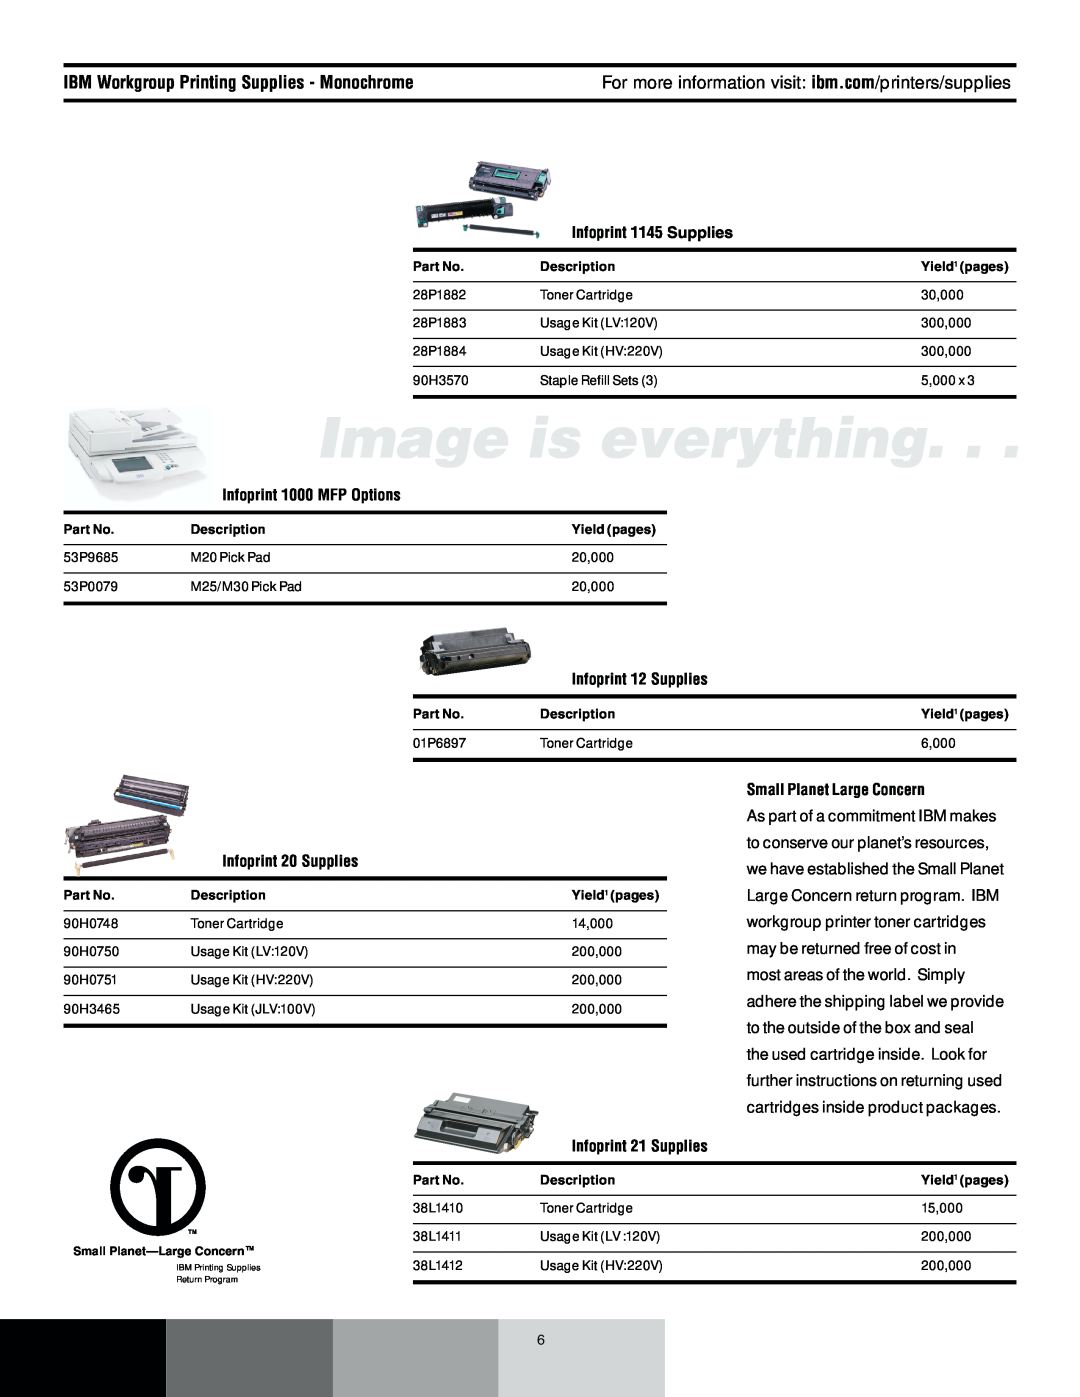 IBM 6400 manual IBM Workgroup Printing Supplies - Monochrome, Infoprint 1145 Supplies, Infoprint 1000 MFP Options 